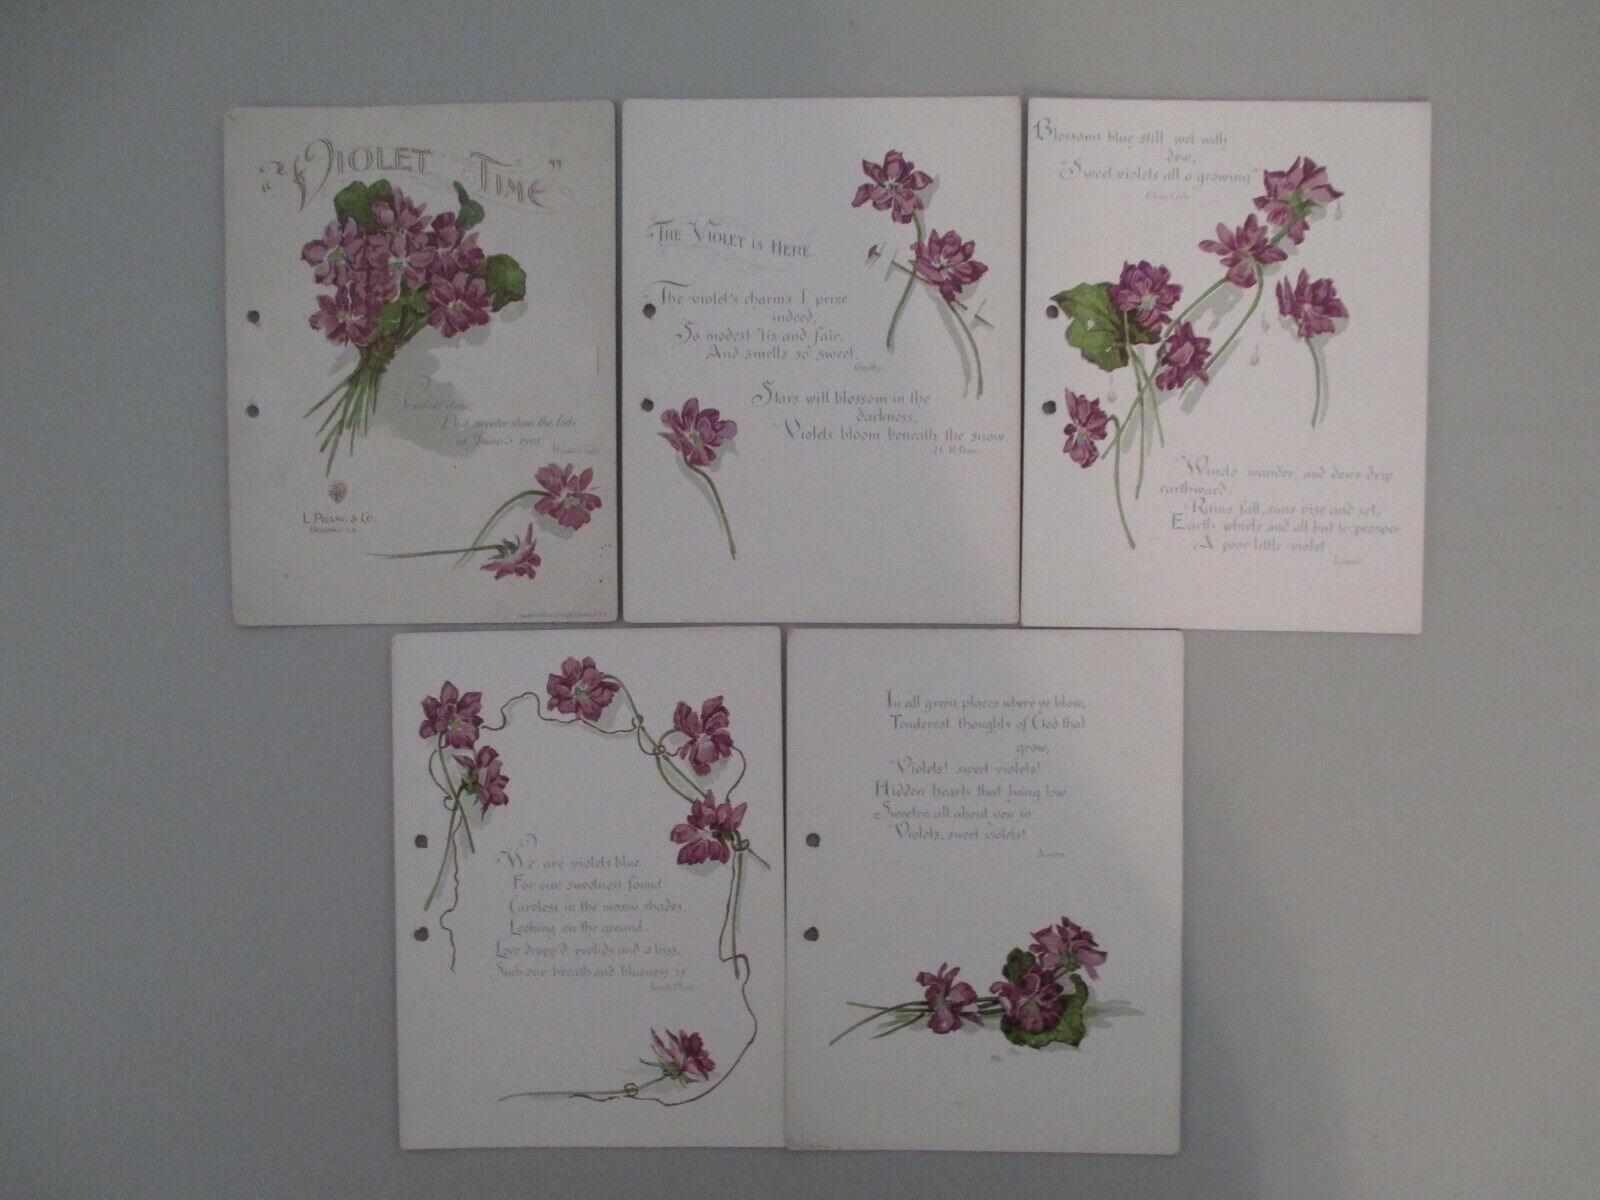 Louis Prang & Co.1895 Violet Time Poetry Lithograph Booklet Flowers L Prang 454e